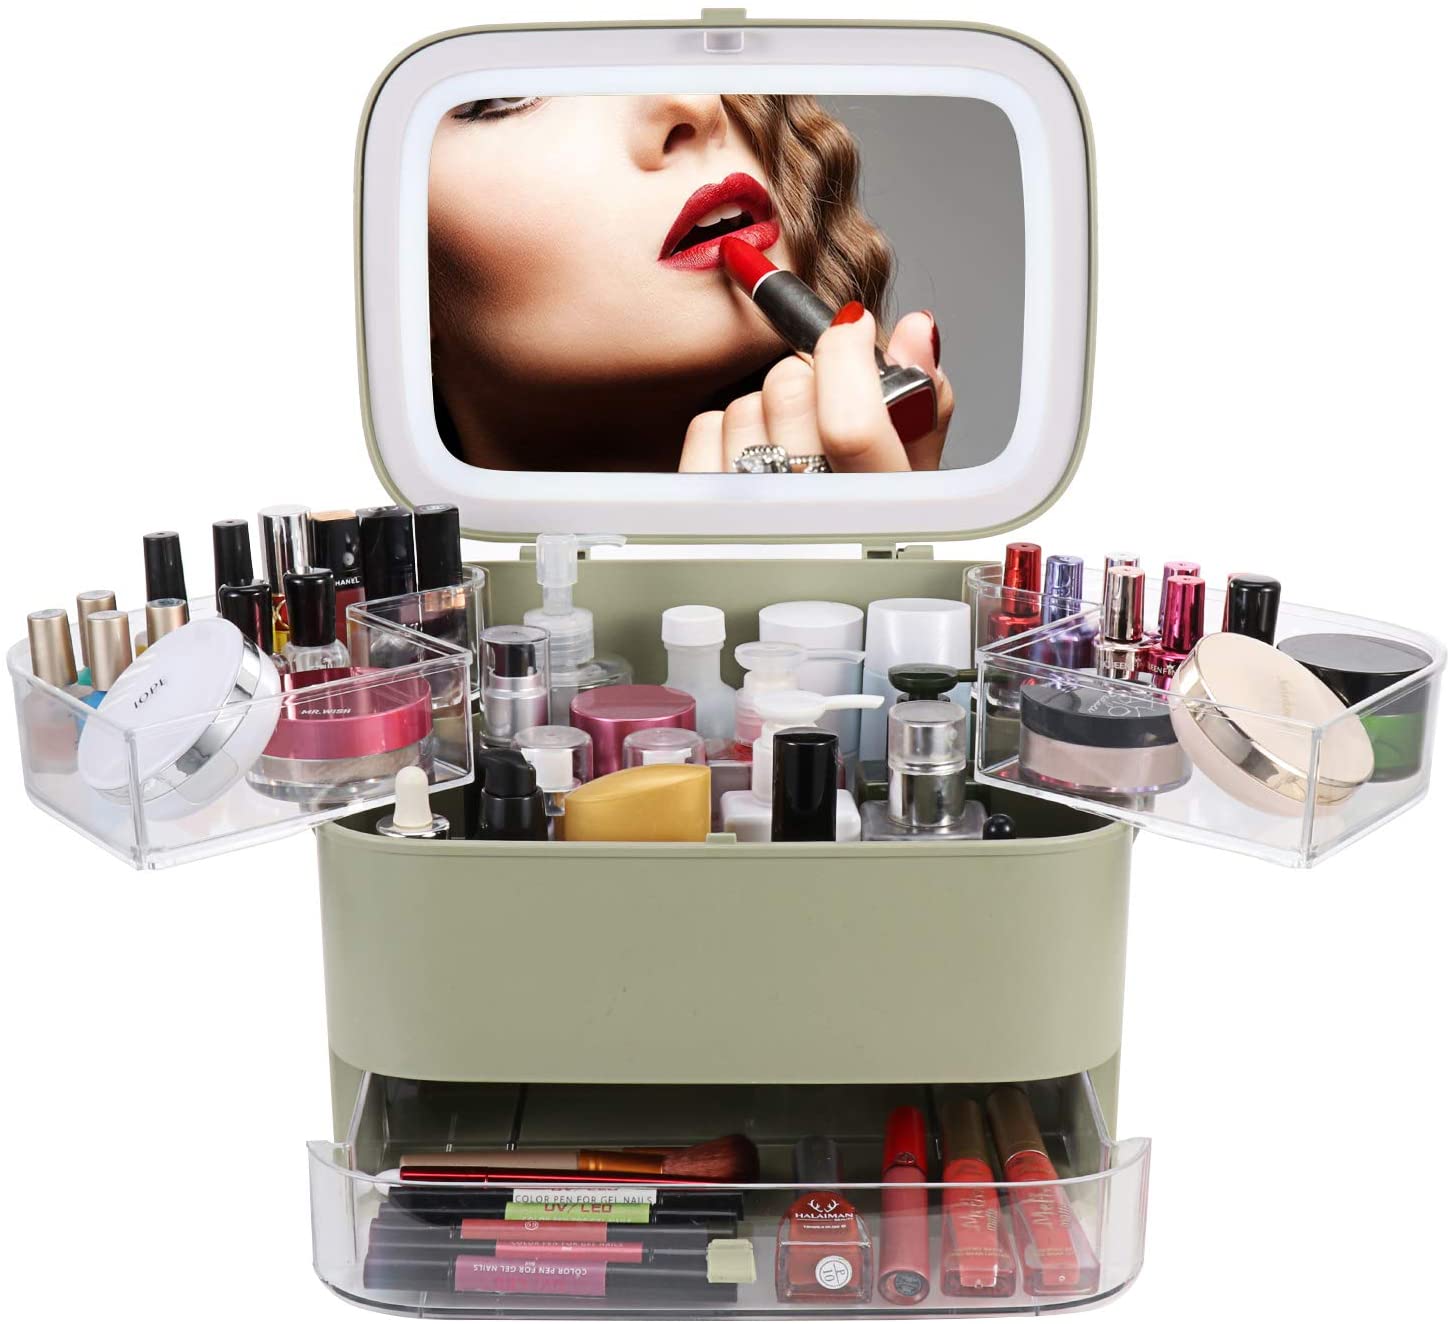 Multifunctional Makeup Organizer With LED Makeup Mirror, Portable Clear Makeup Storage Box Desktop Sundry Storage Case,Waterproof&Dustproof Cosmetic Jewelry Display Cases